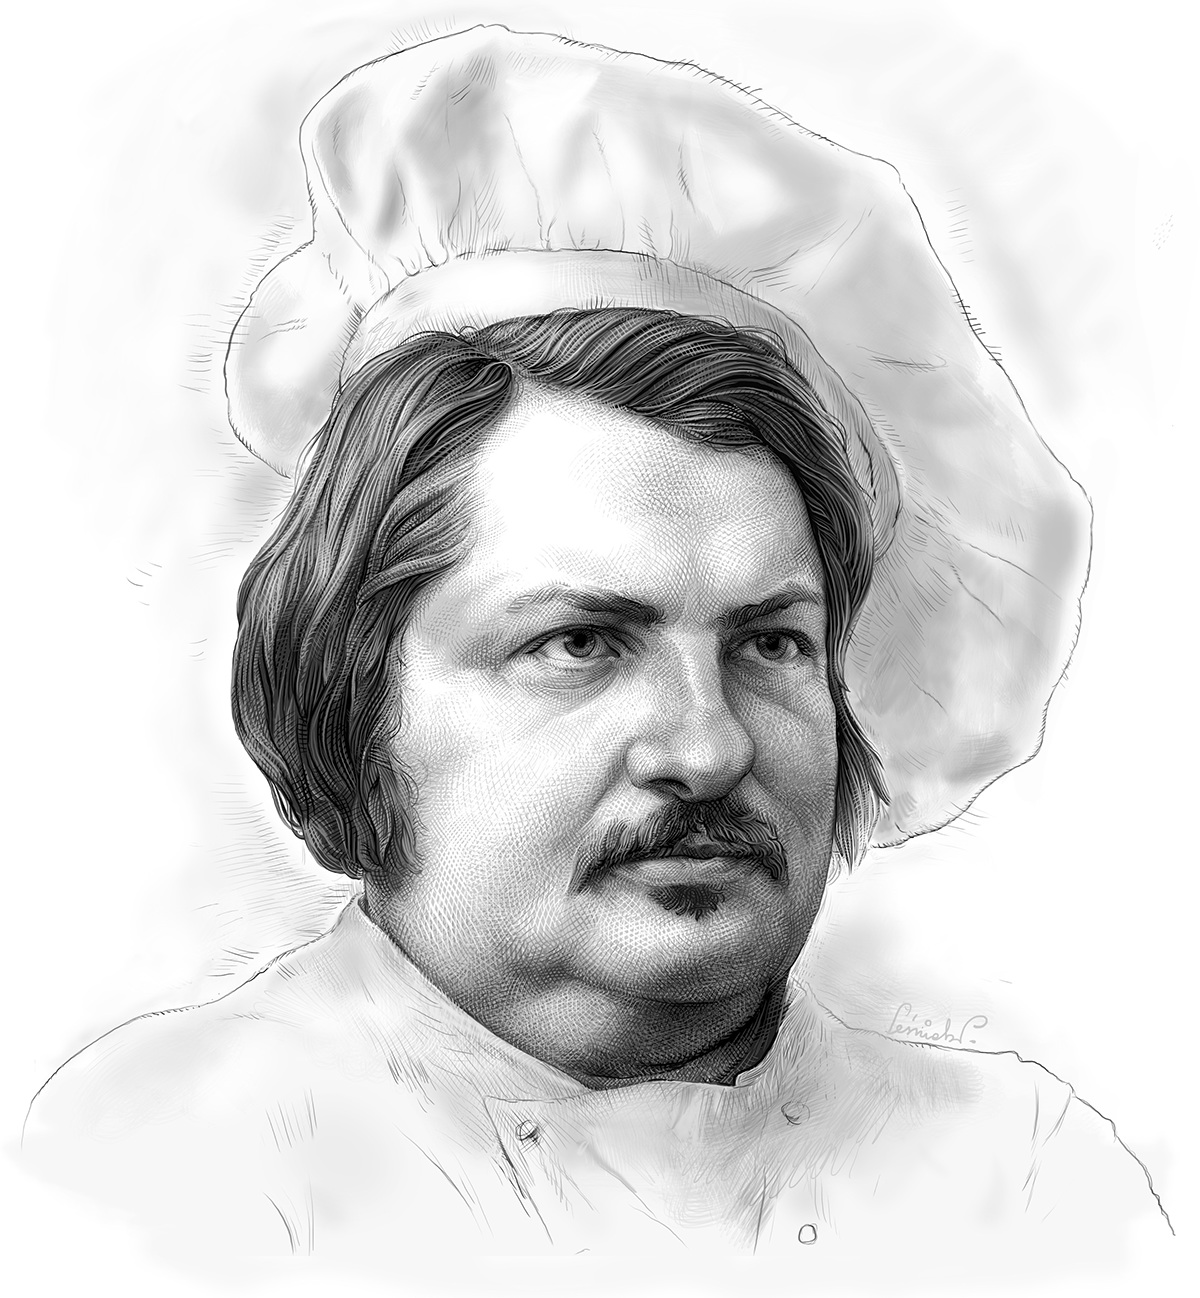 Magazyn Ksiazki Piotr Lesniak Janusz Glowacki portrait Portret ilustracja illustr